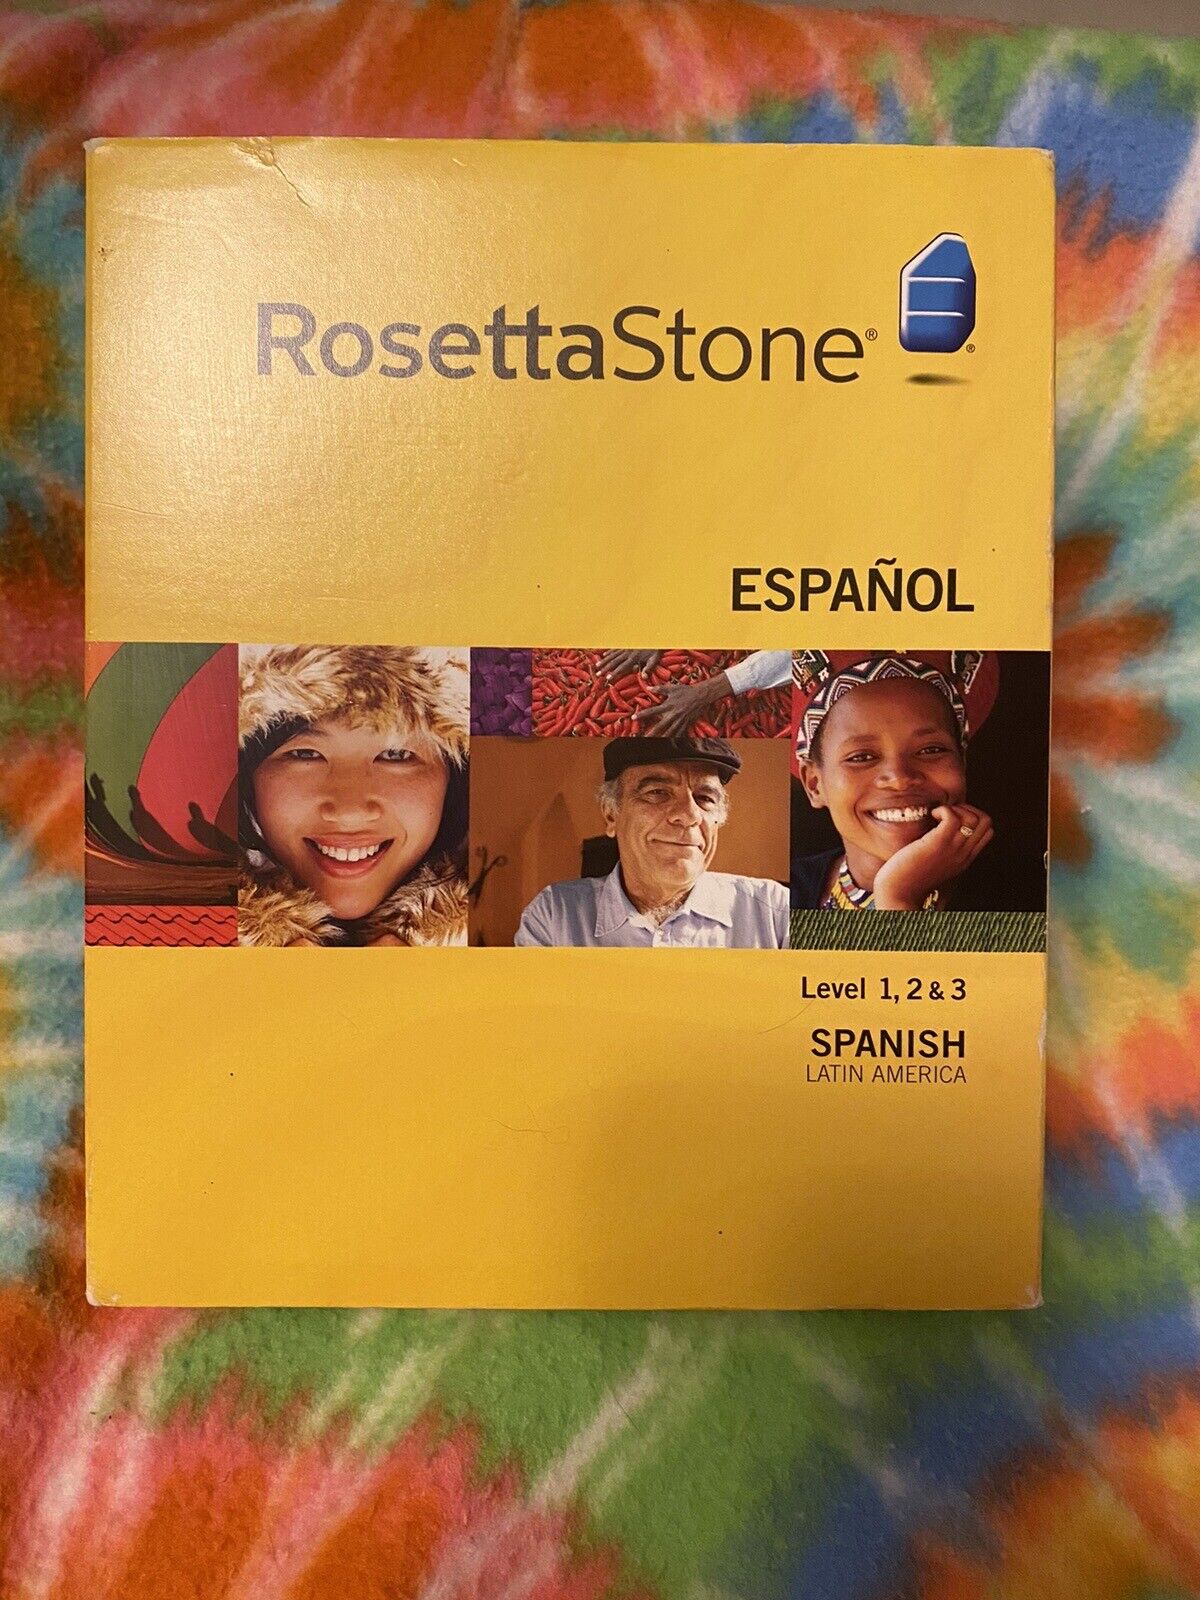 Rosetta Stone Spanish Latin America Levels 1-3 - Full Version With Headphones